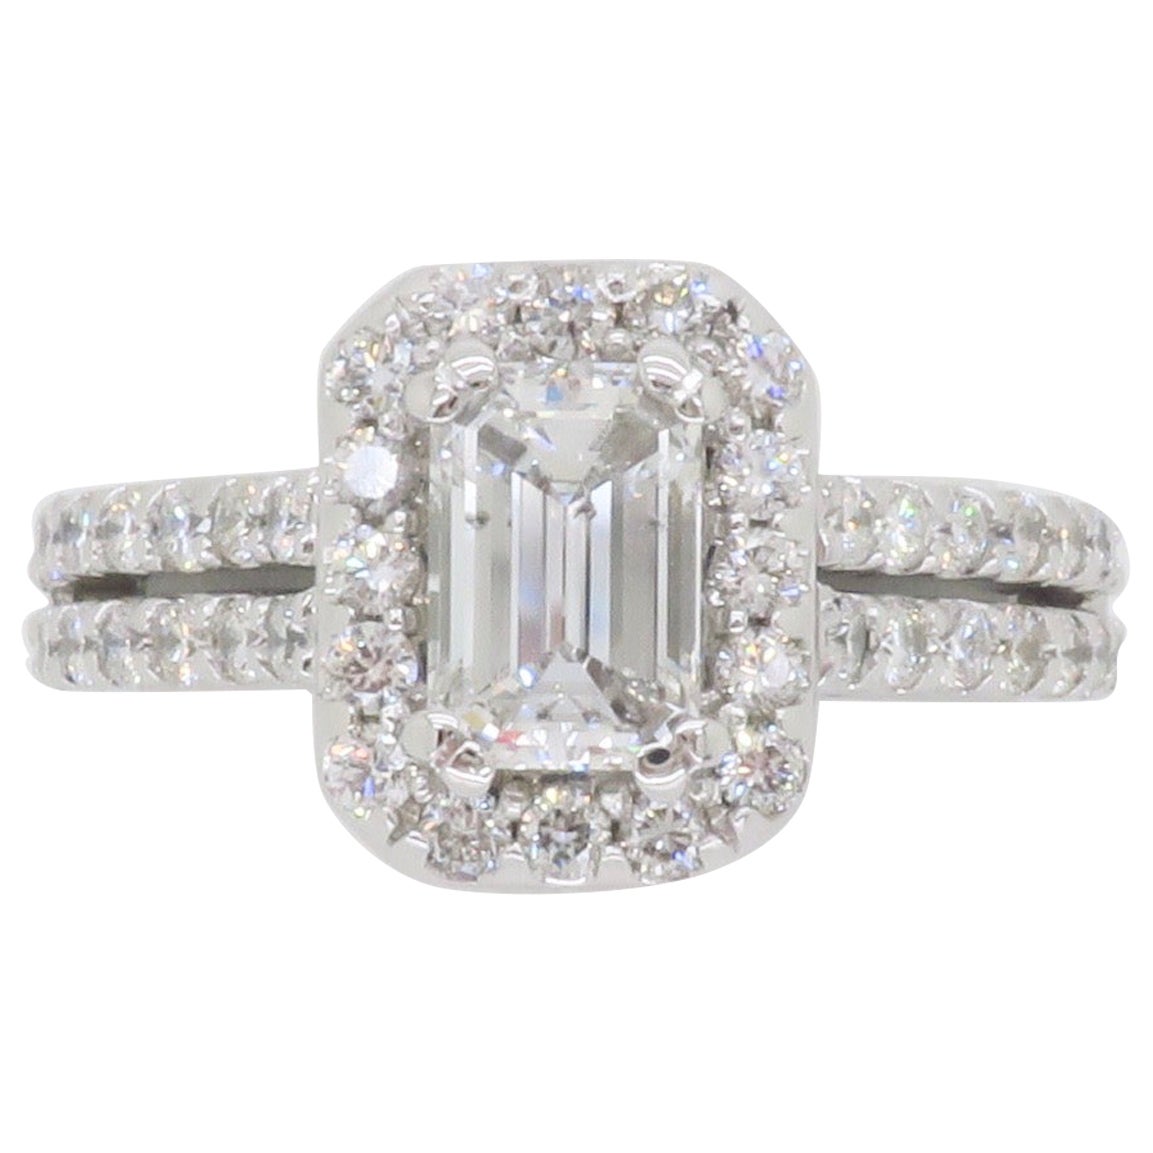 2.14CTW Certified Emerald Cut Diamond Engagement Ring 